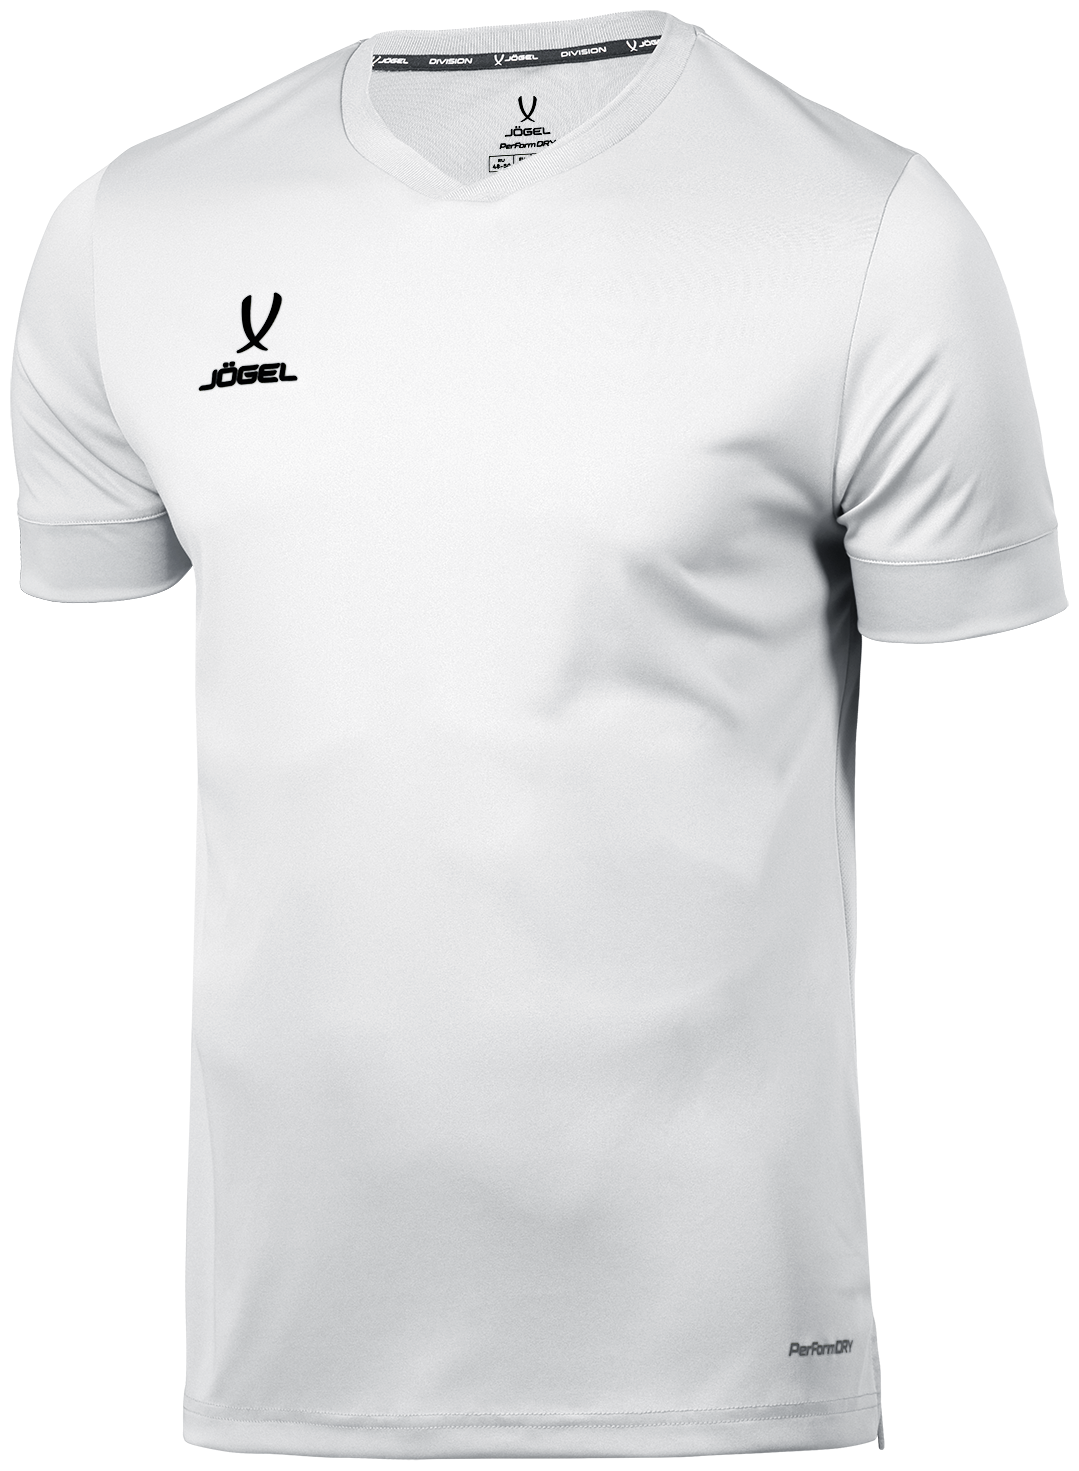 Футболка игровая Jögel Division Performdry Union Jersey белый/белый размер S